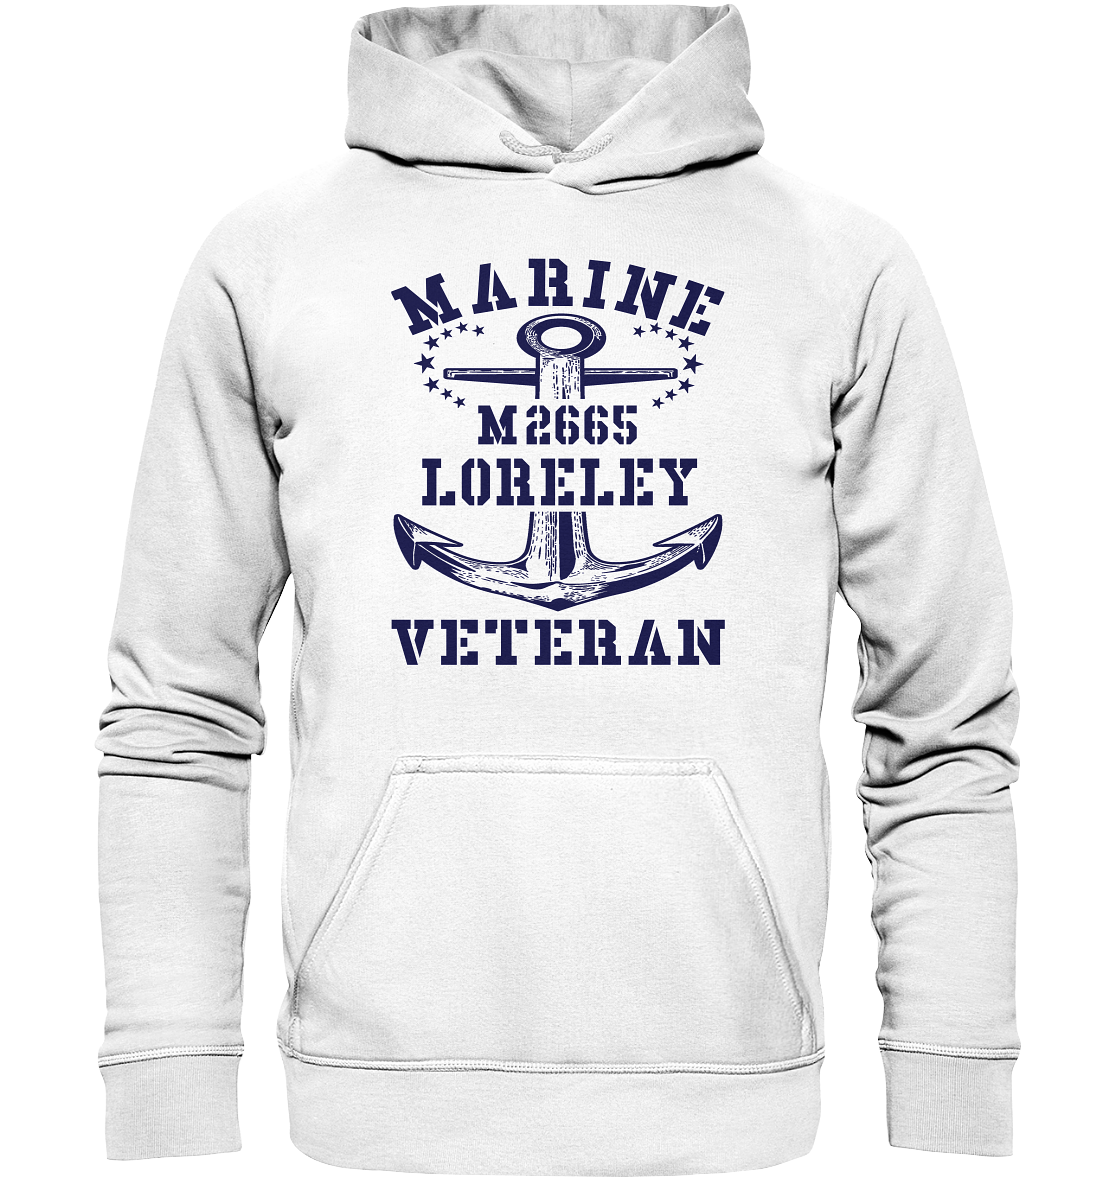 BiMi M2665 LORELEY Marine Veteran - Basic Unisex Hoodie